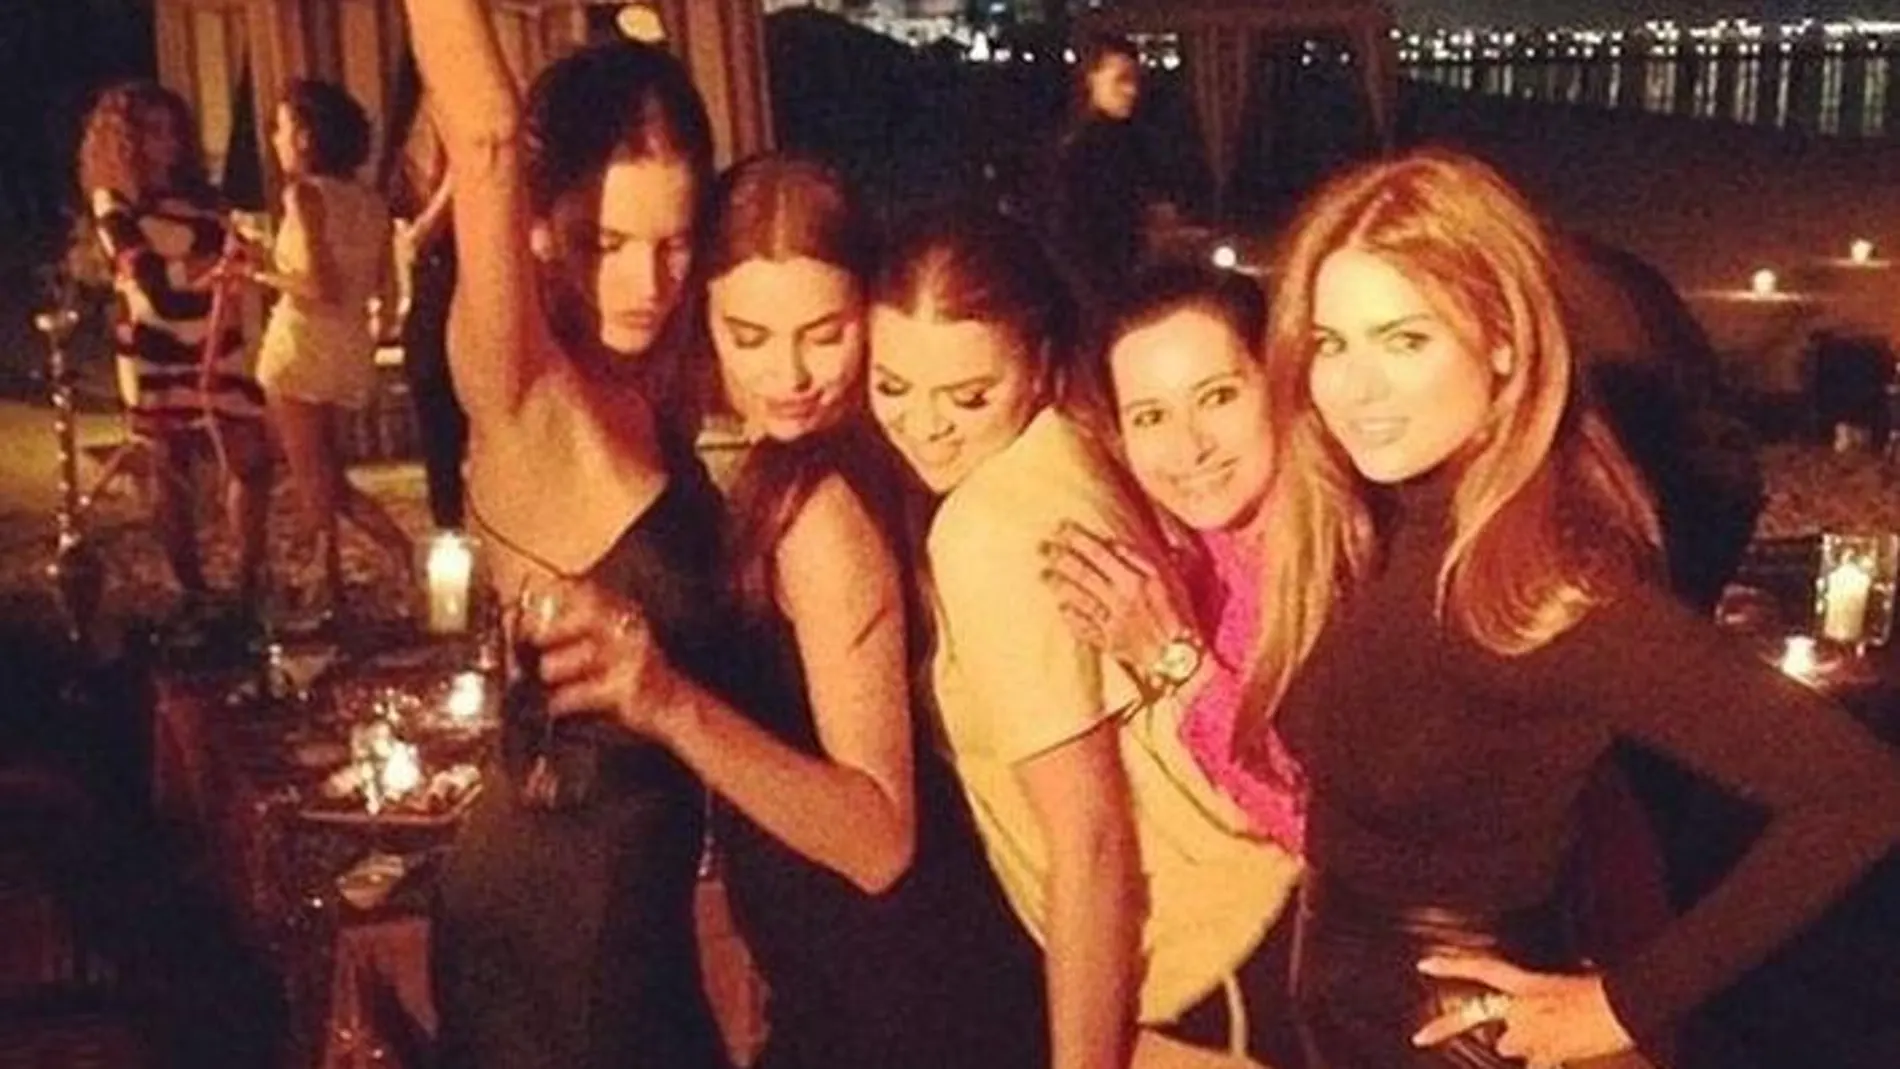 Irina Shayk, Paris y Nicky Hilton, Alessandra Ambrosio y Khloe Kardashian disfrutan de la noche de Dubai